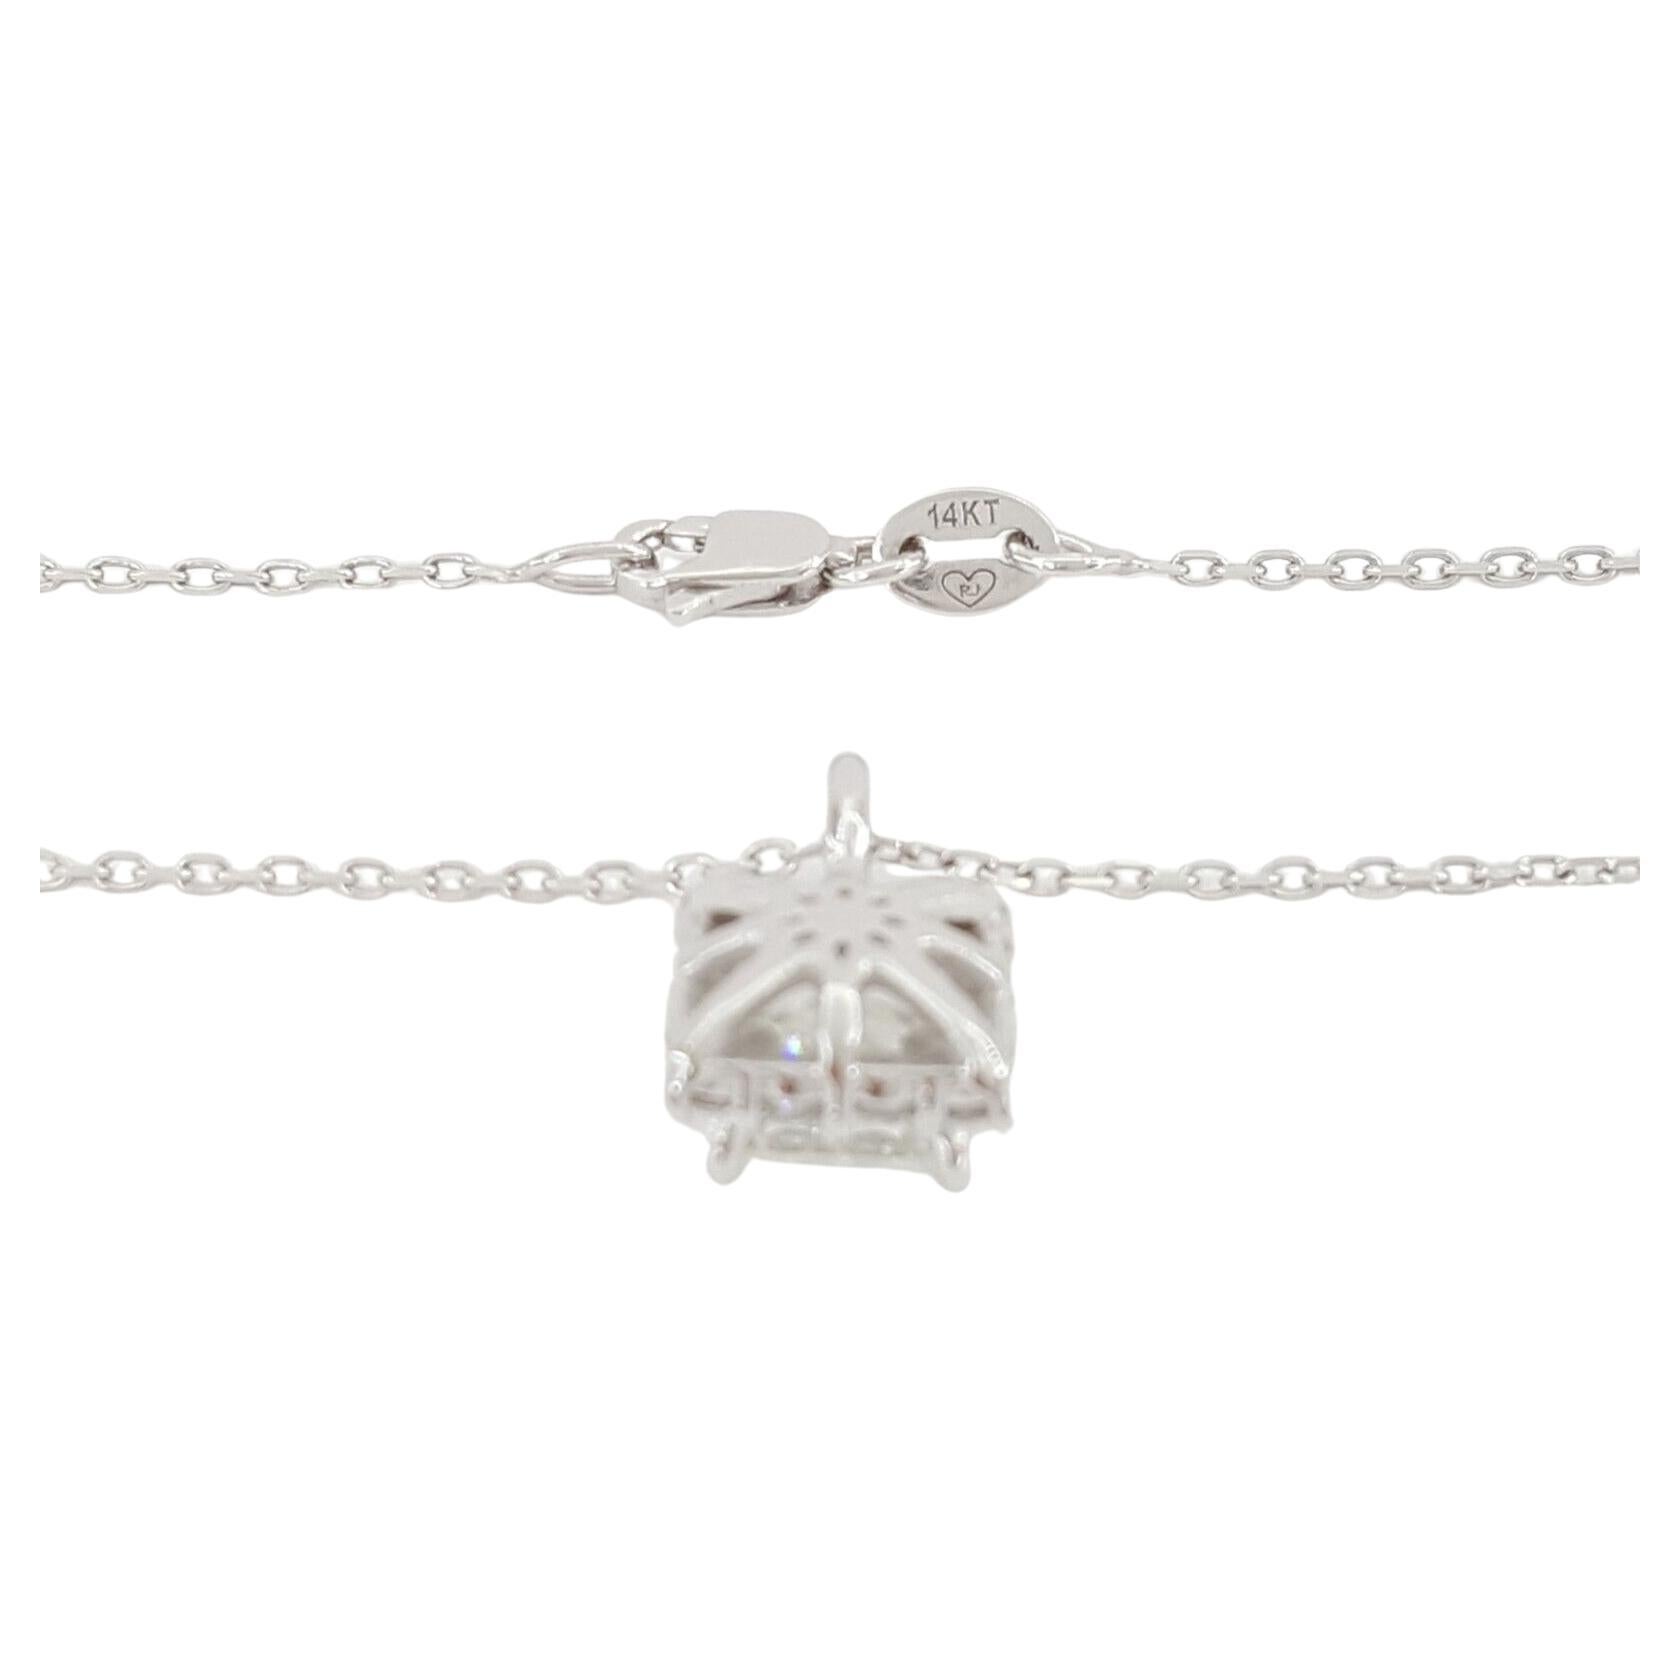 Princess Brilliant Cut Diamond Halo Necklace In Excellent Condition For Sale In Rome, IT